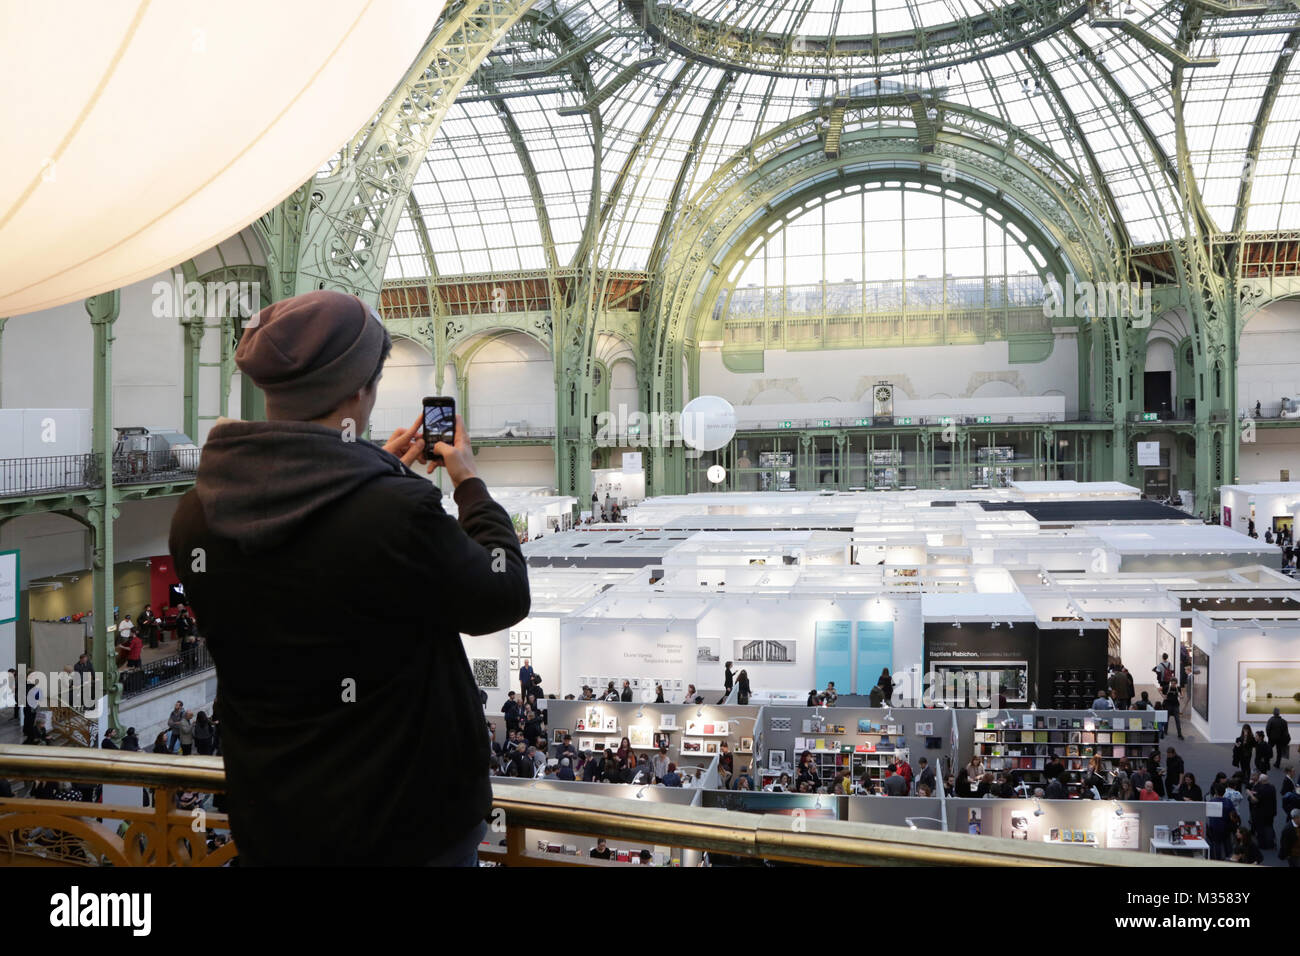 PARIS - NOVEMBER 10: Man shooting photo with phone during Paris Photo art fair at Grand Palais on November 10, 2017 in Paris, France. Stock Photo